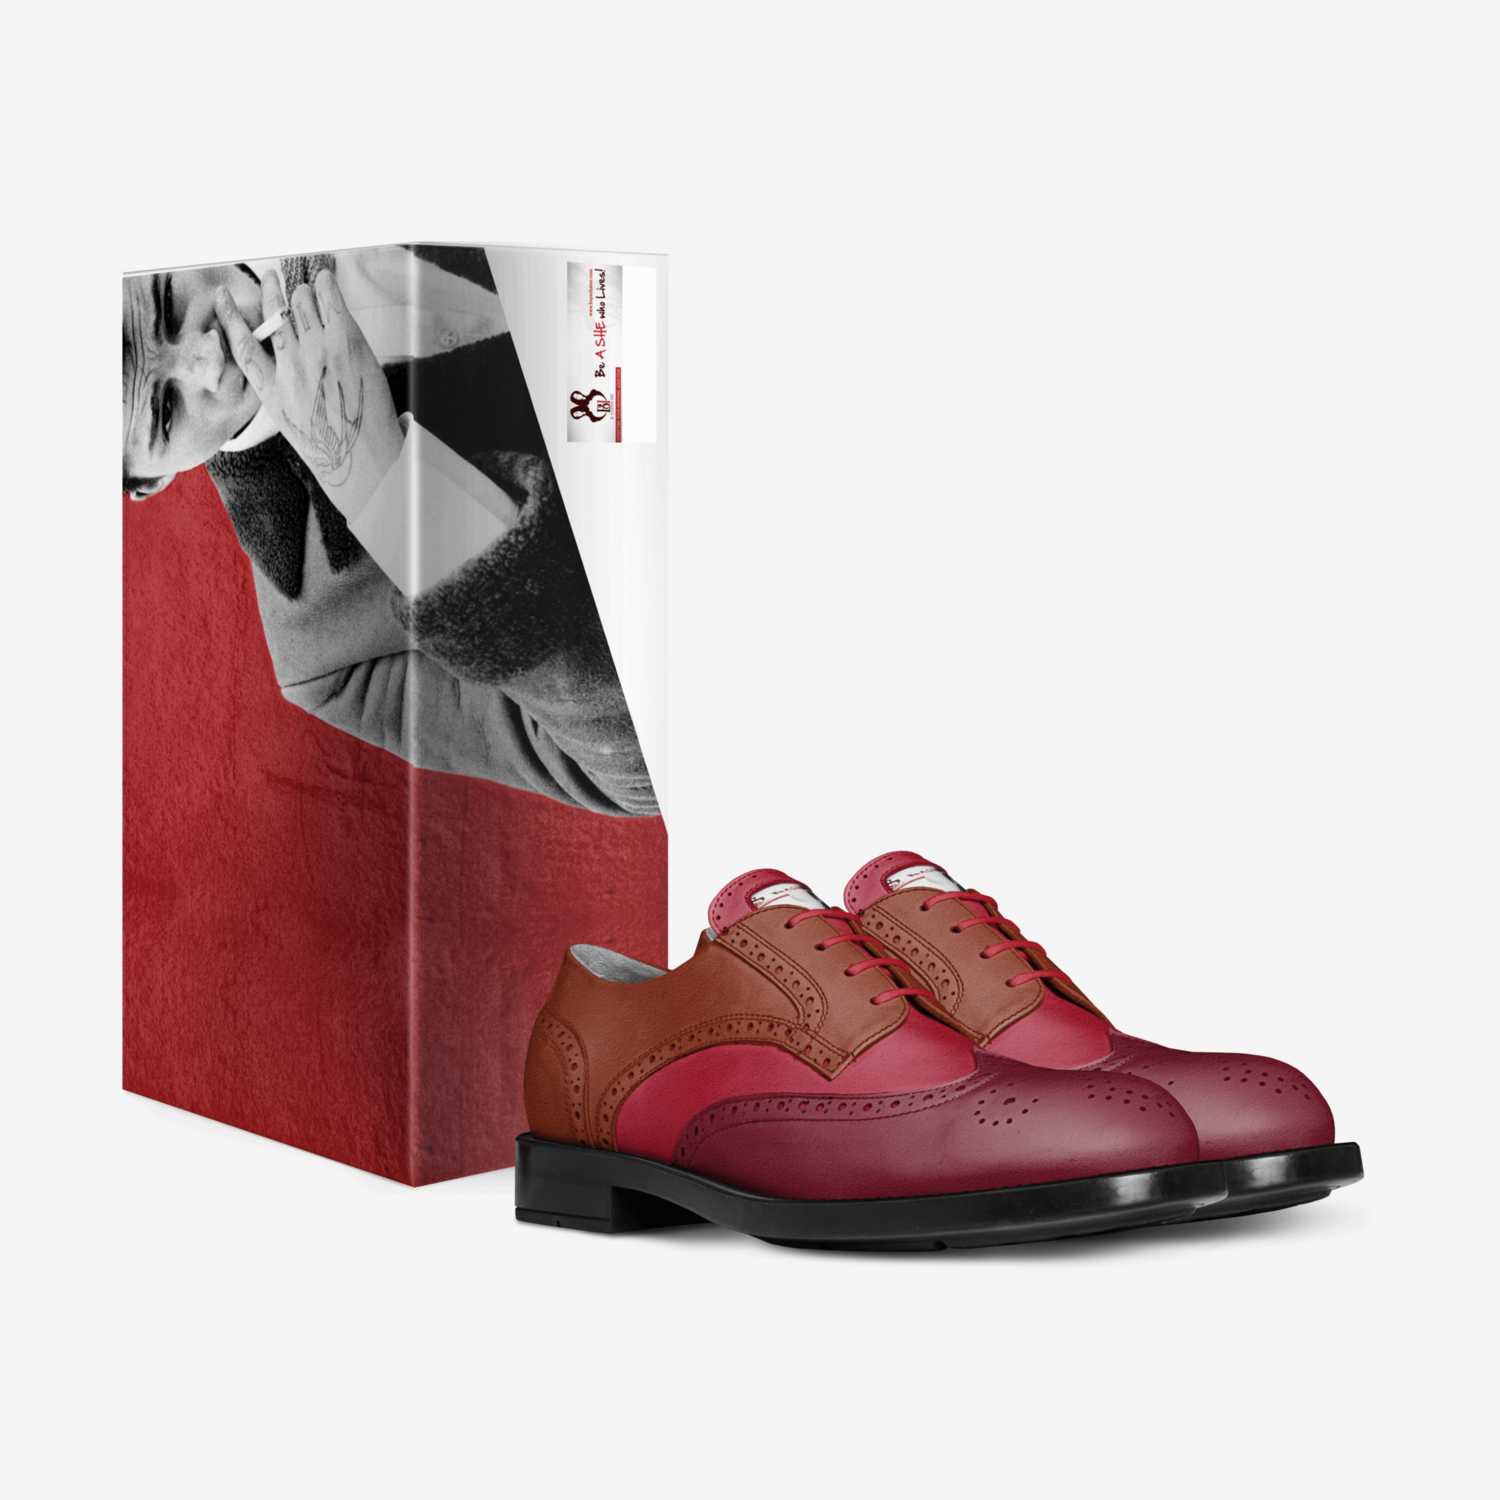 B Ayesha Inc V custom made in Italy shoes by Bina Banks | Box view